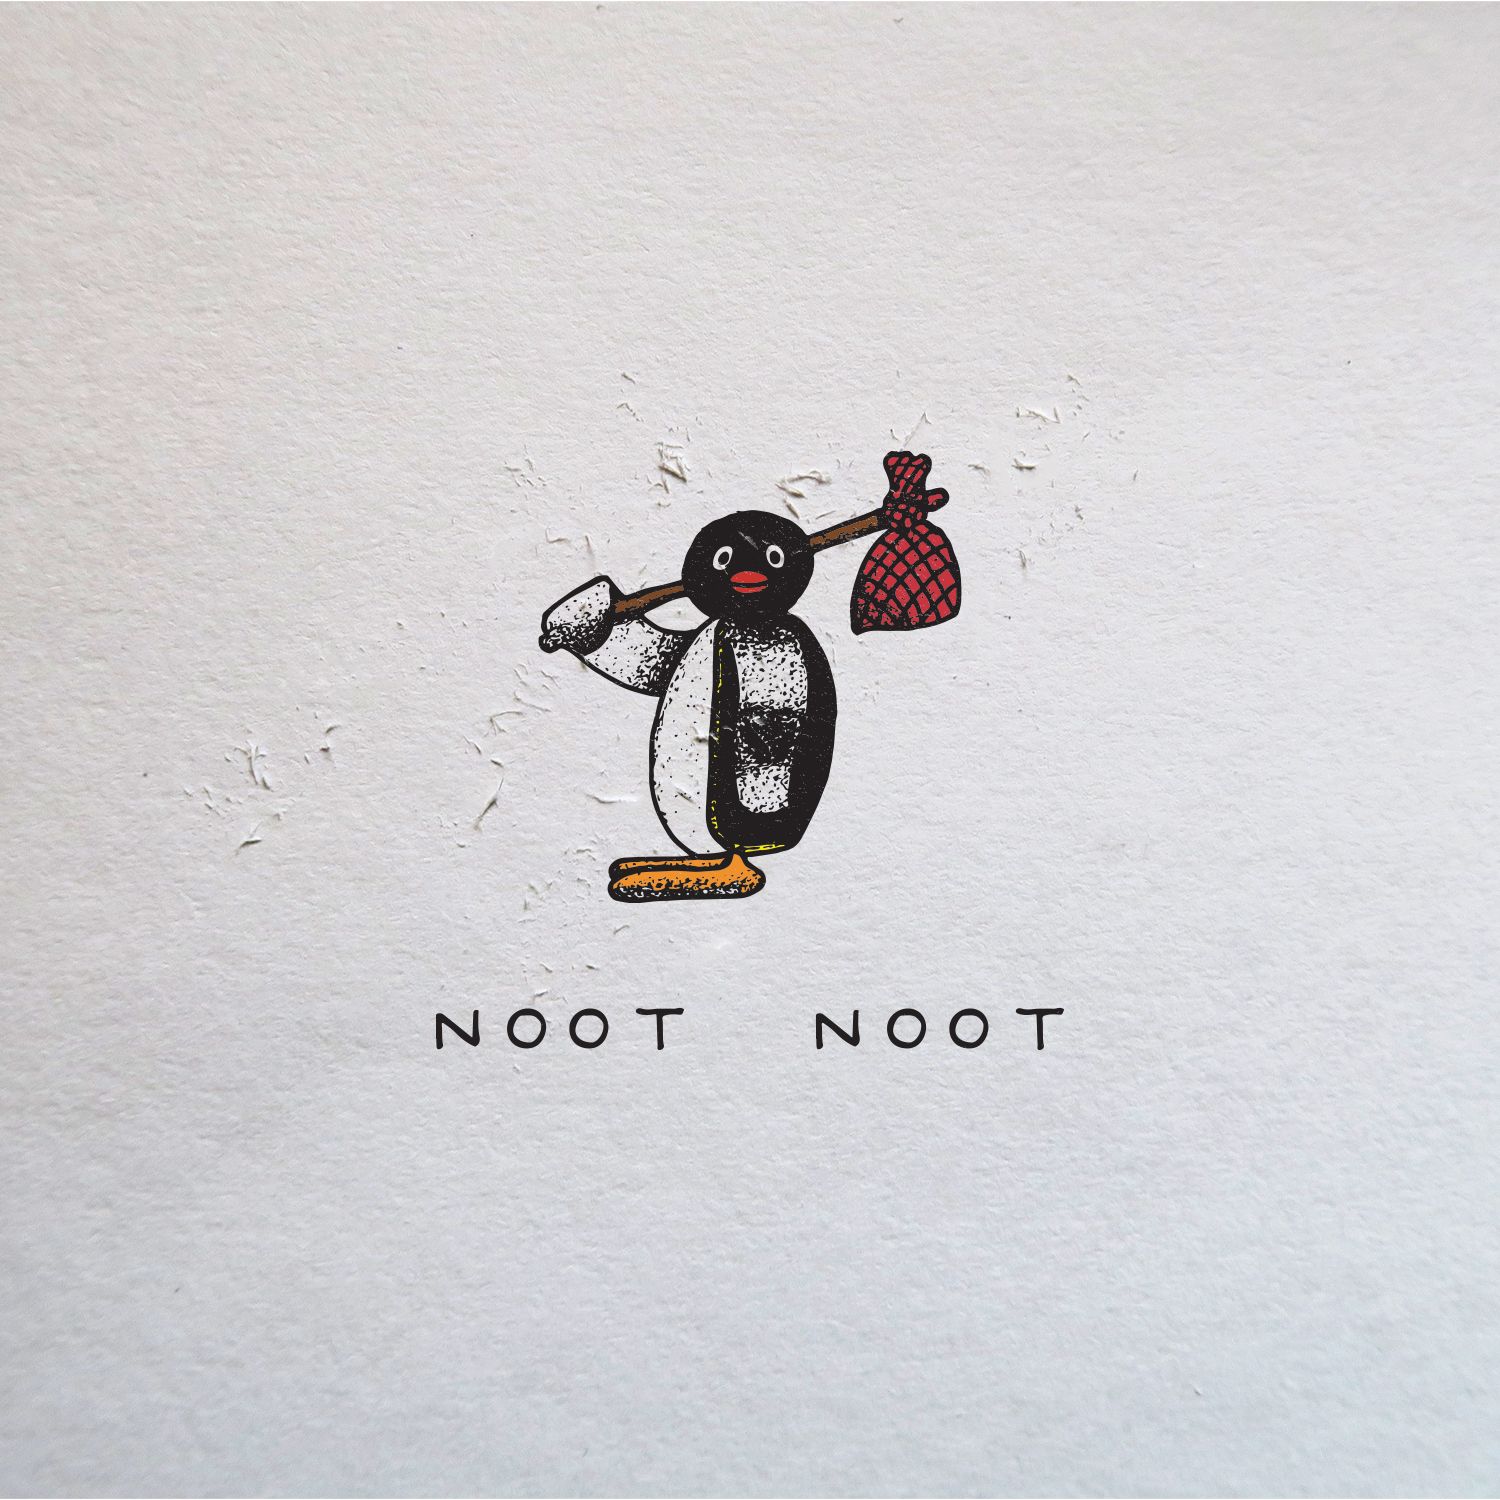 Pingu Noot Noot. Pingu, Pingu memes, Cartoon wallpaper iphone